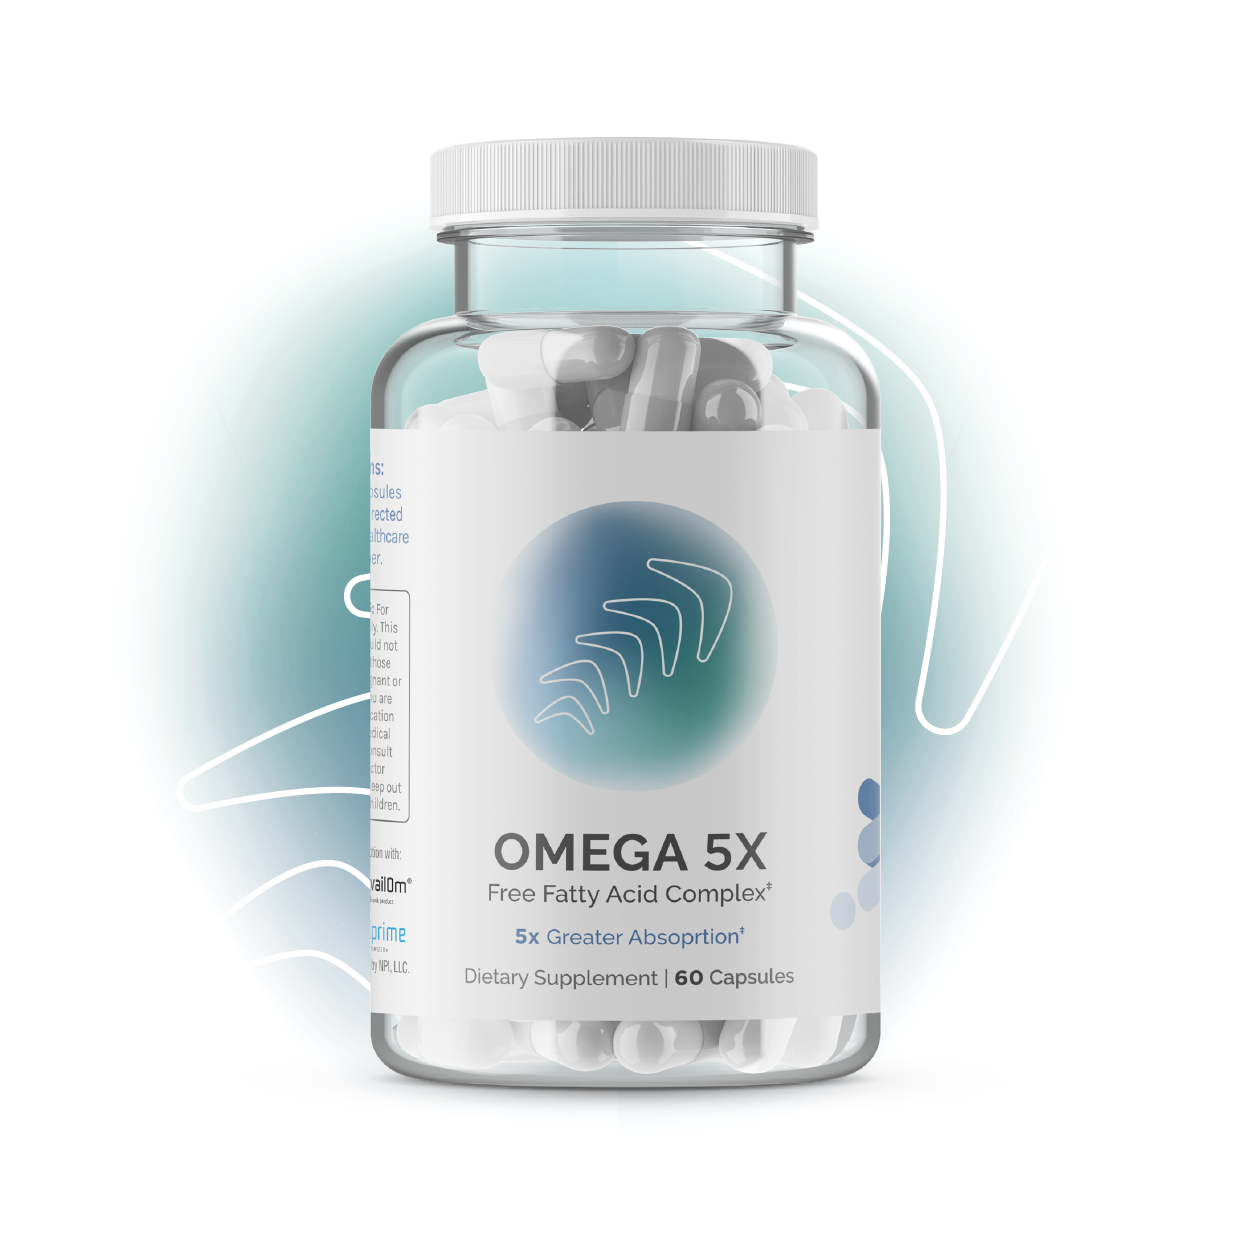 Omega 5x